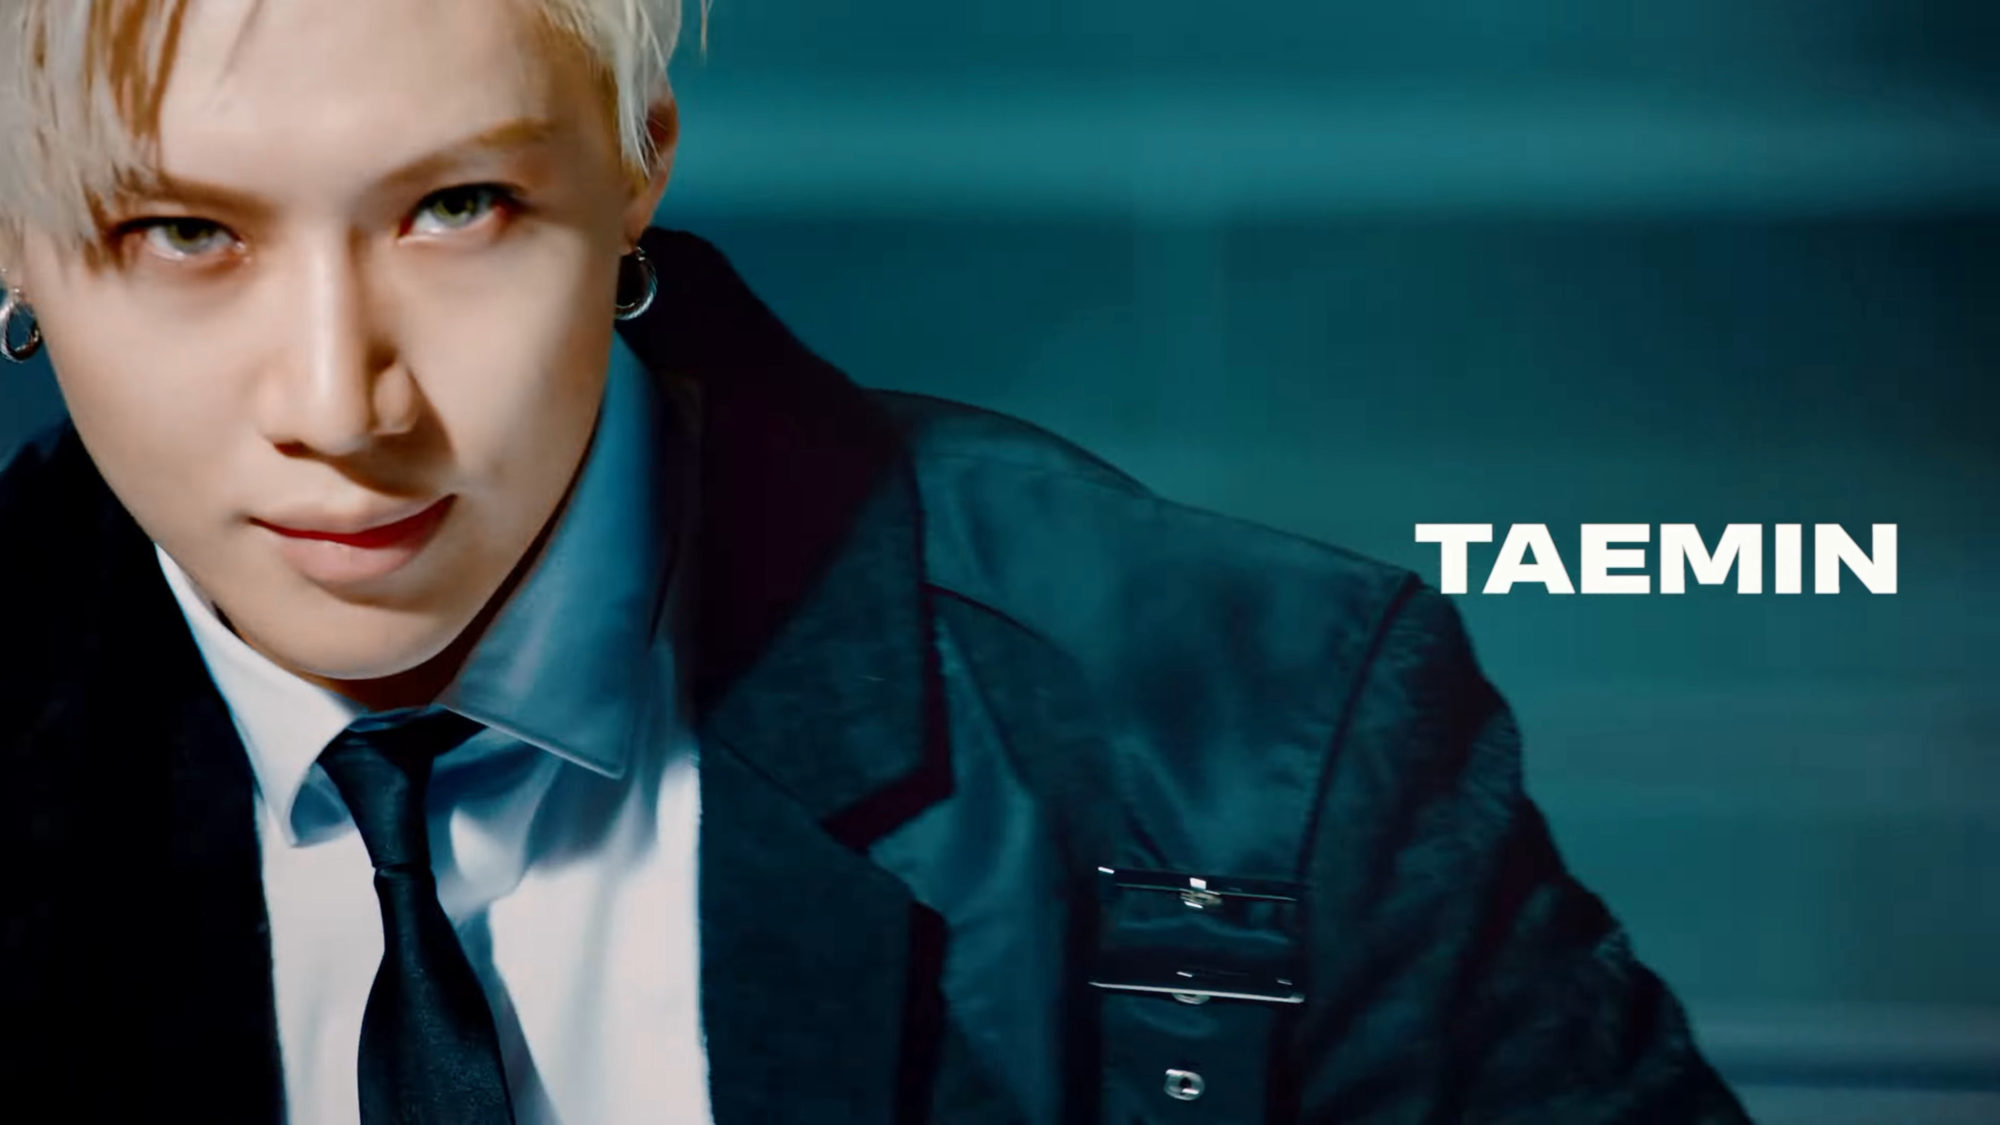 Taemin Super M Group Trailer